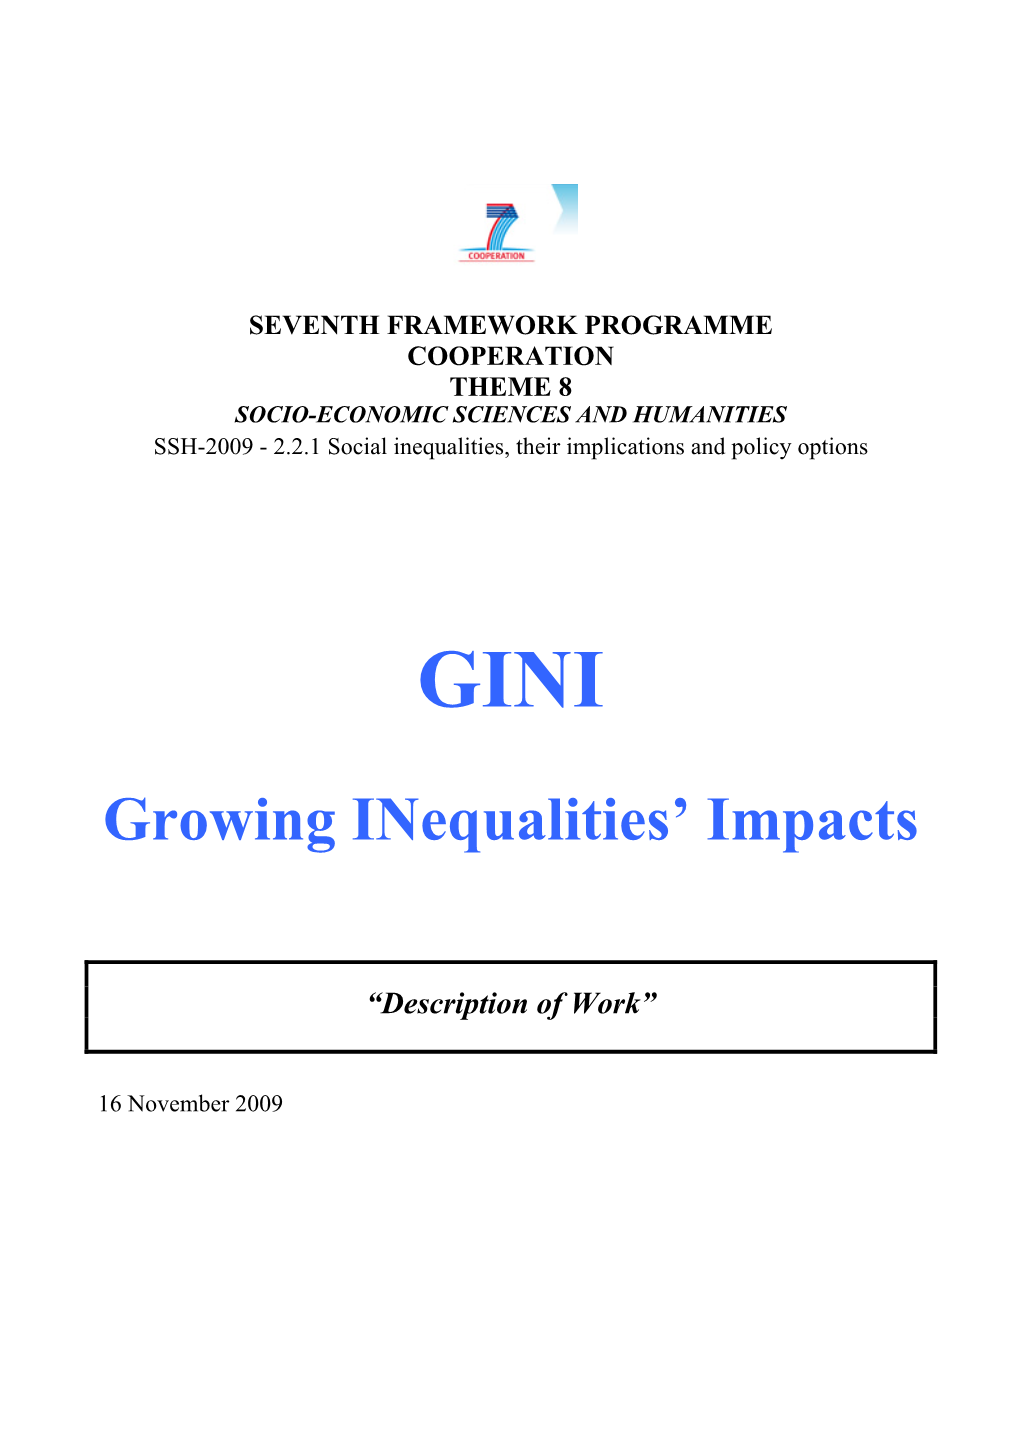 GINI Growing Inequalities' Impacts